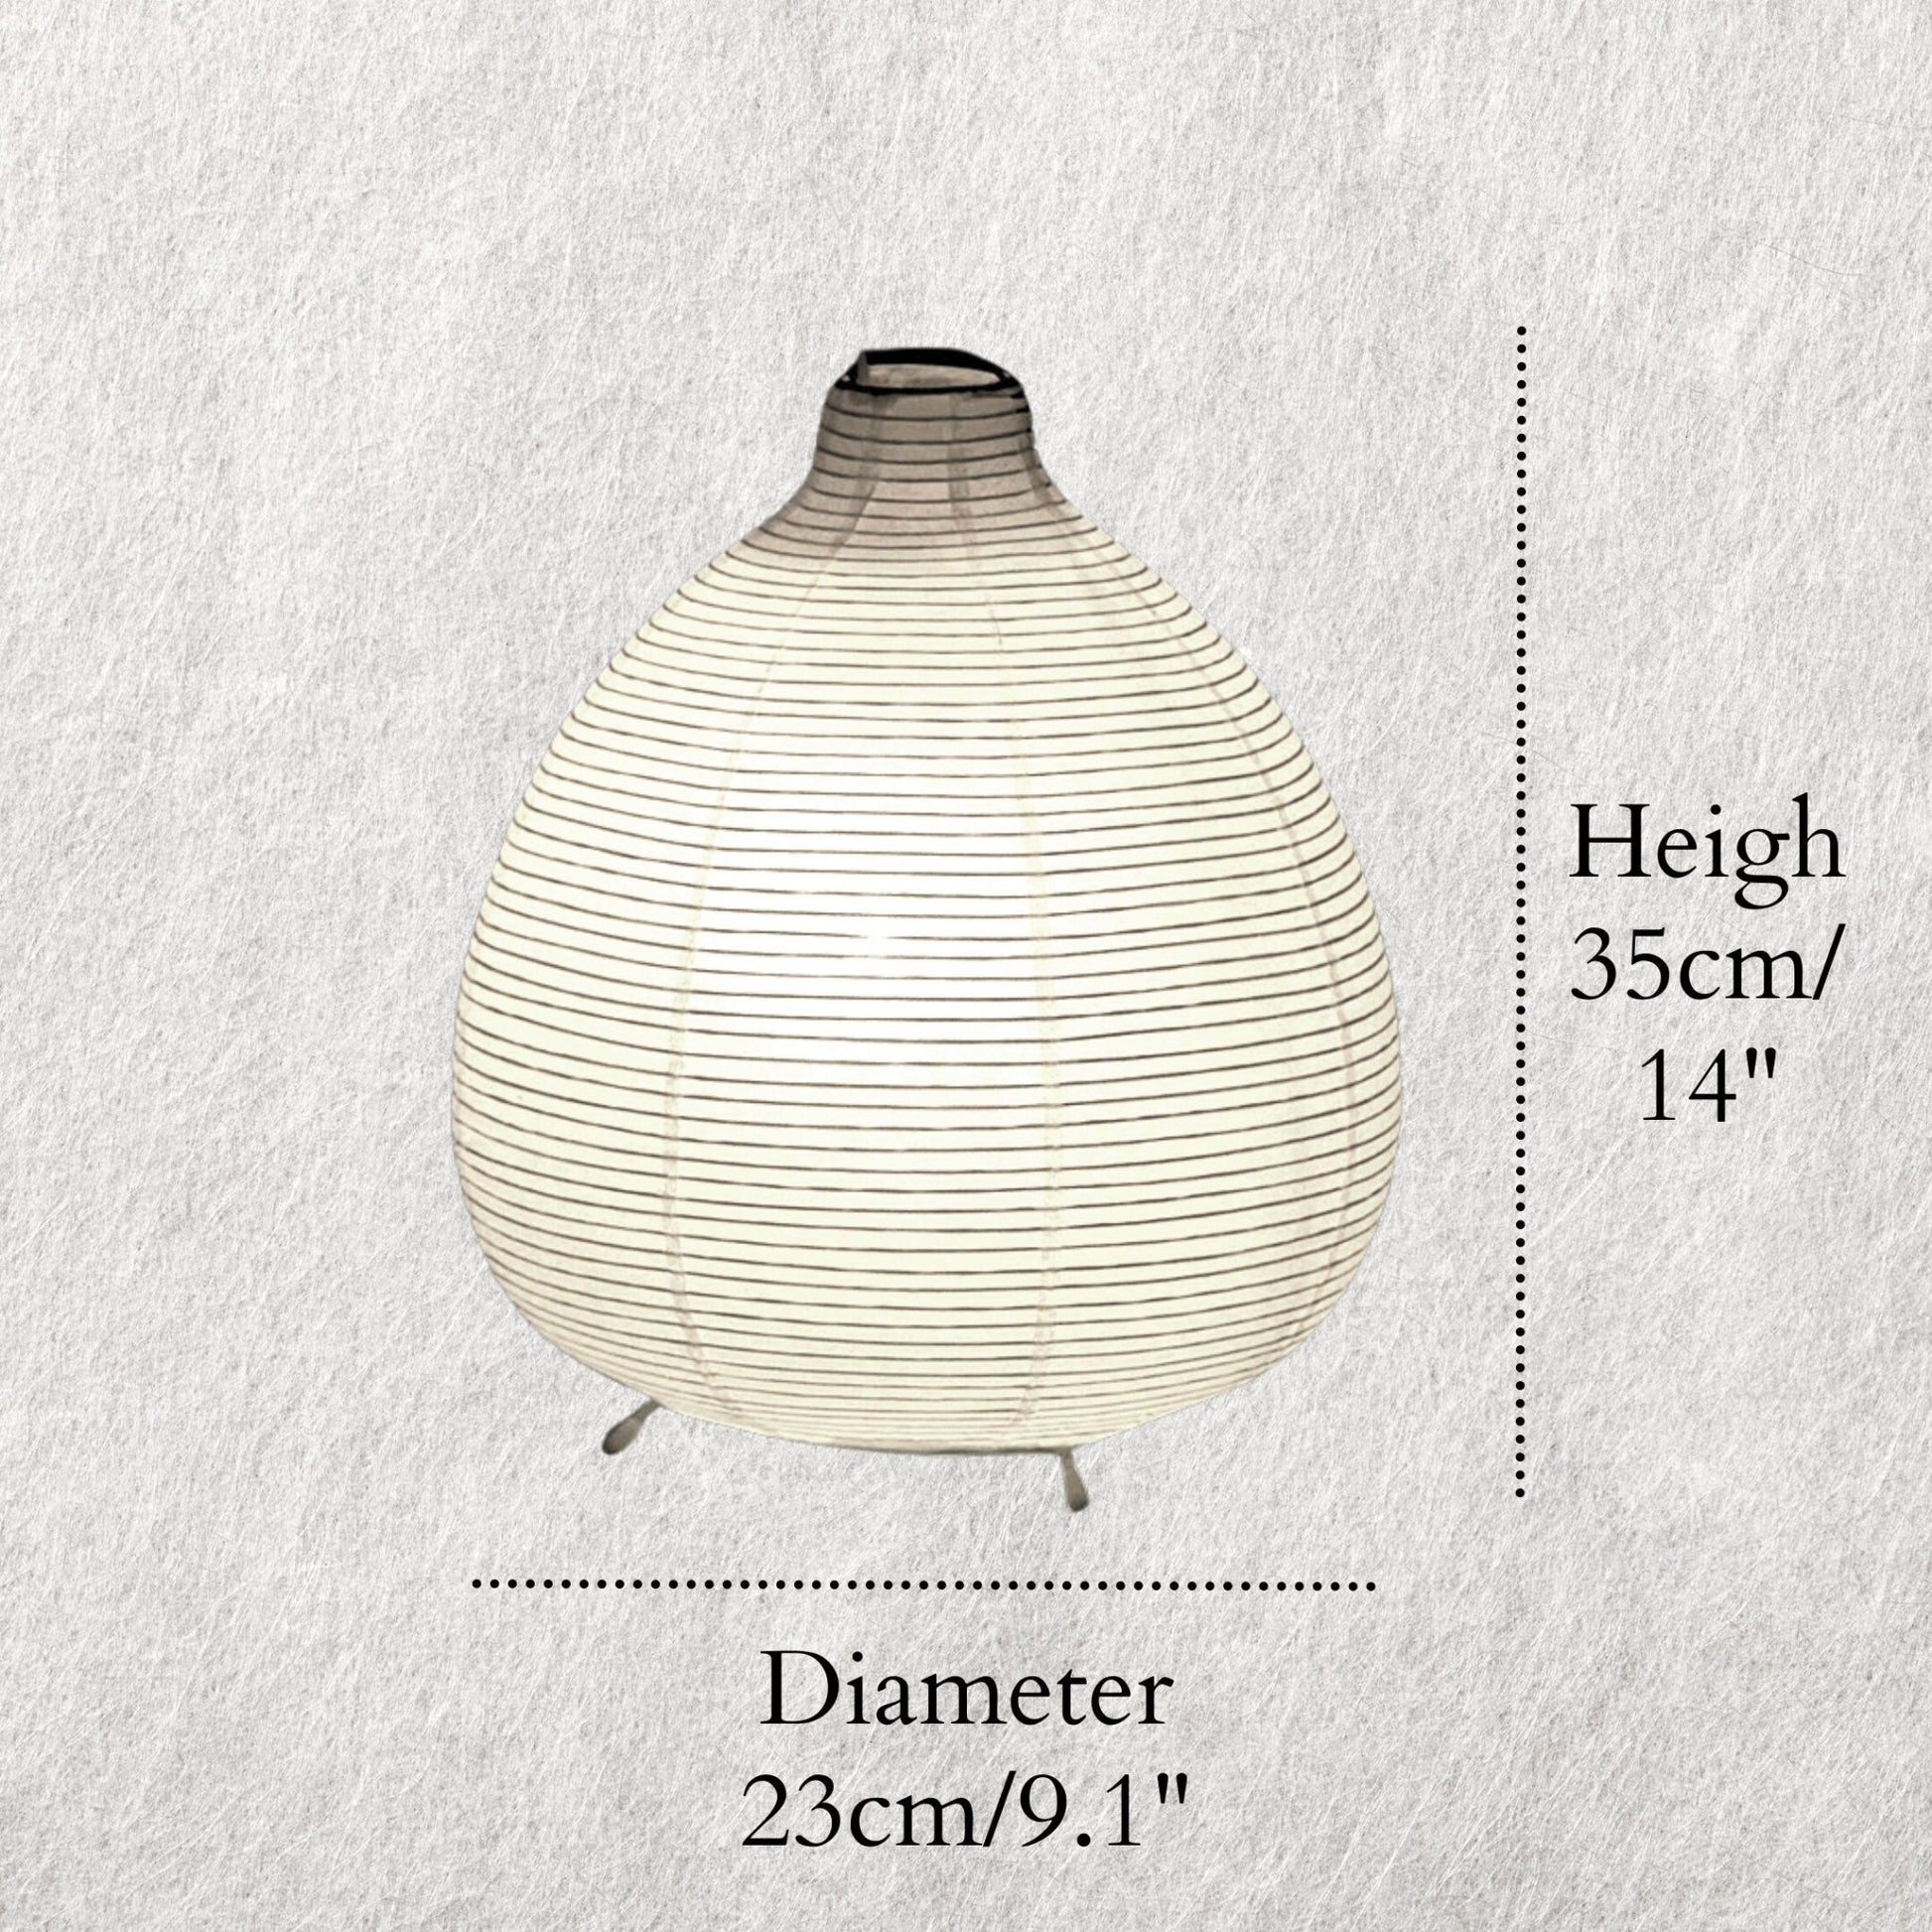 Paper Table Lamp With Tear Shape | Mid Century Table Lamp, Asian, Japanese, Scandinavian, Desk Lamp, Bedside Light - TABLE LAMP -